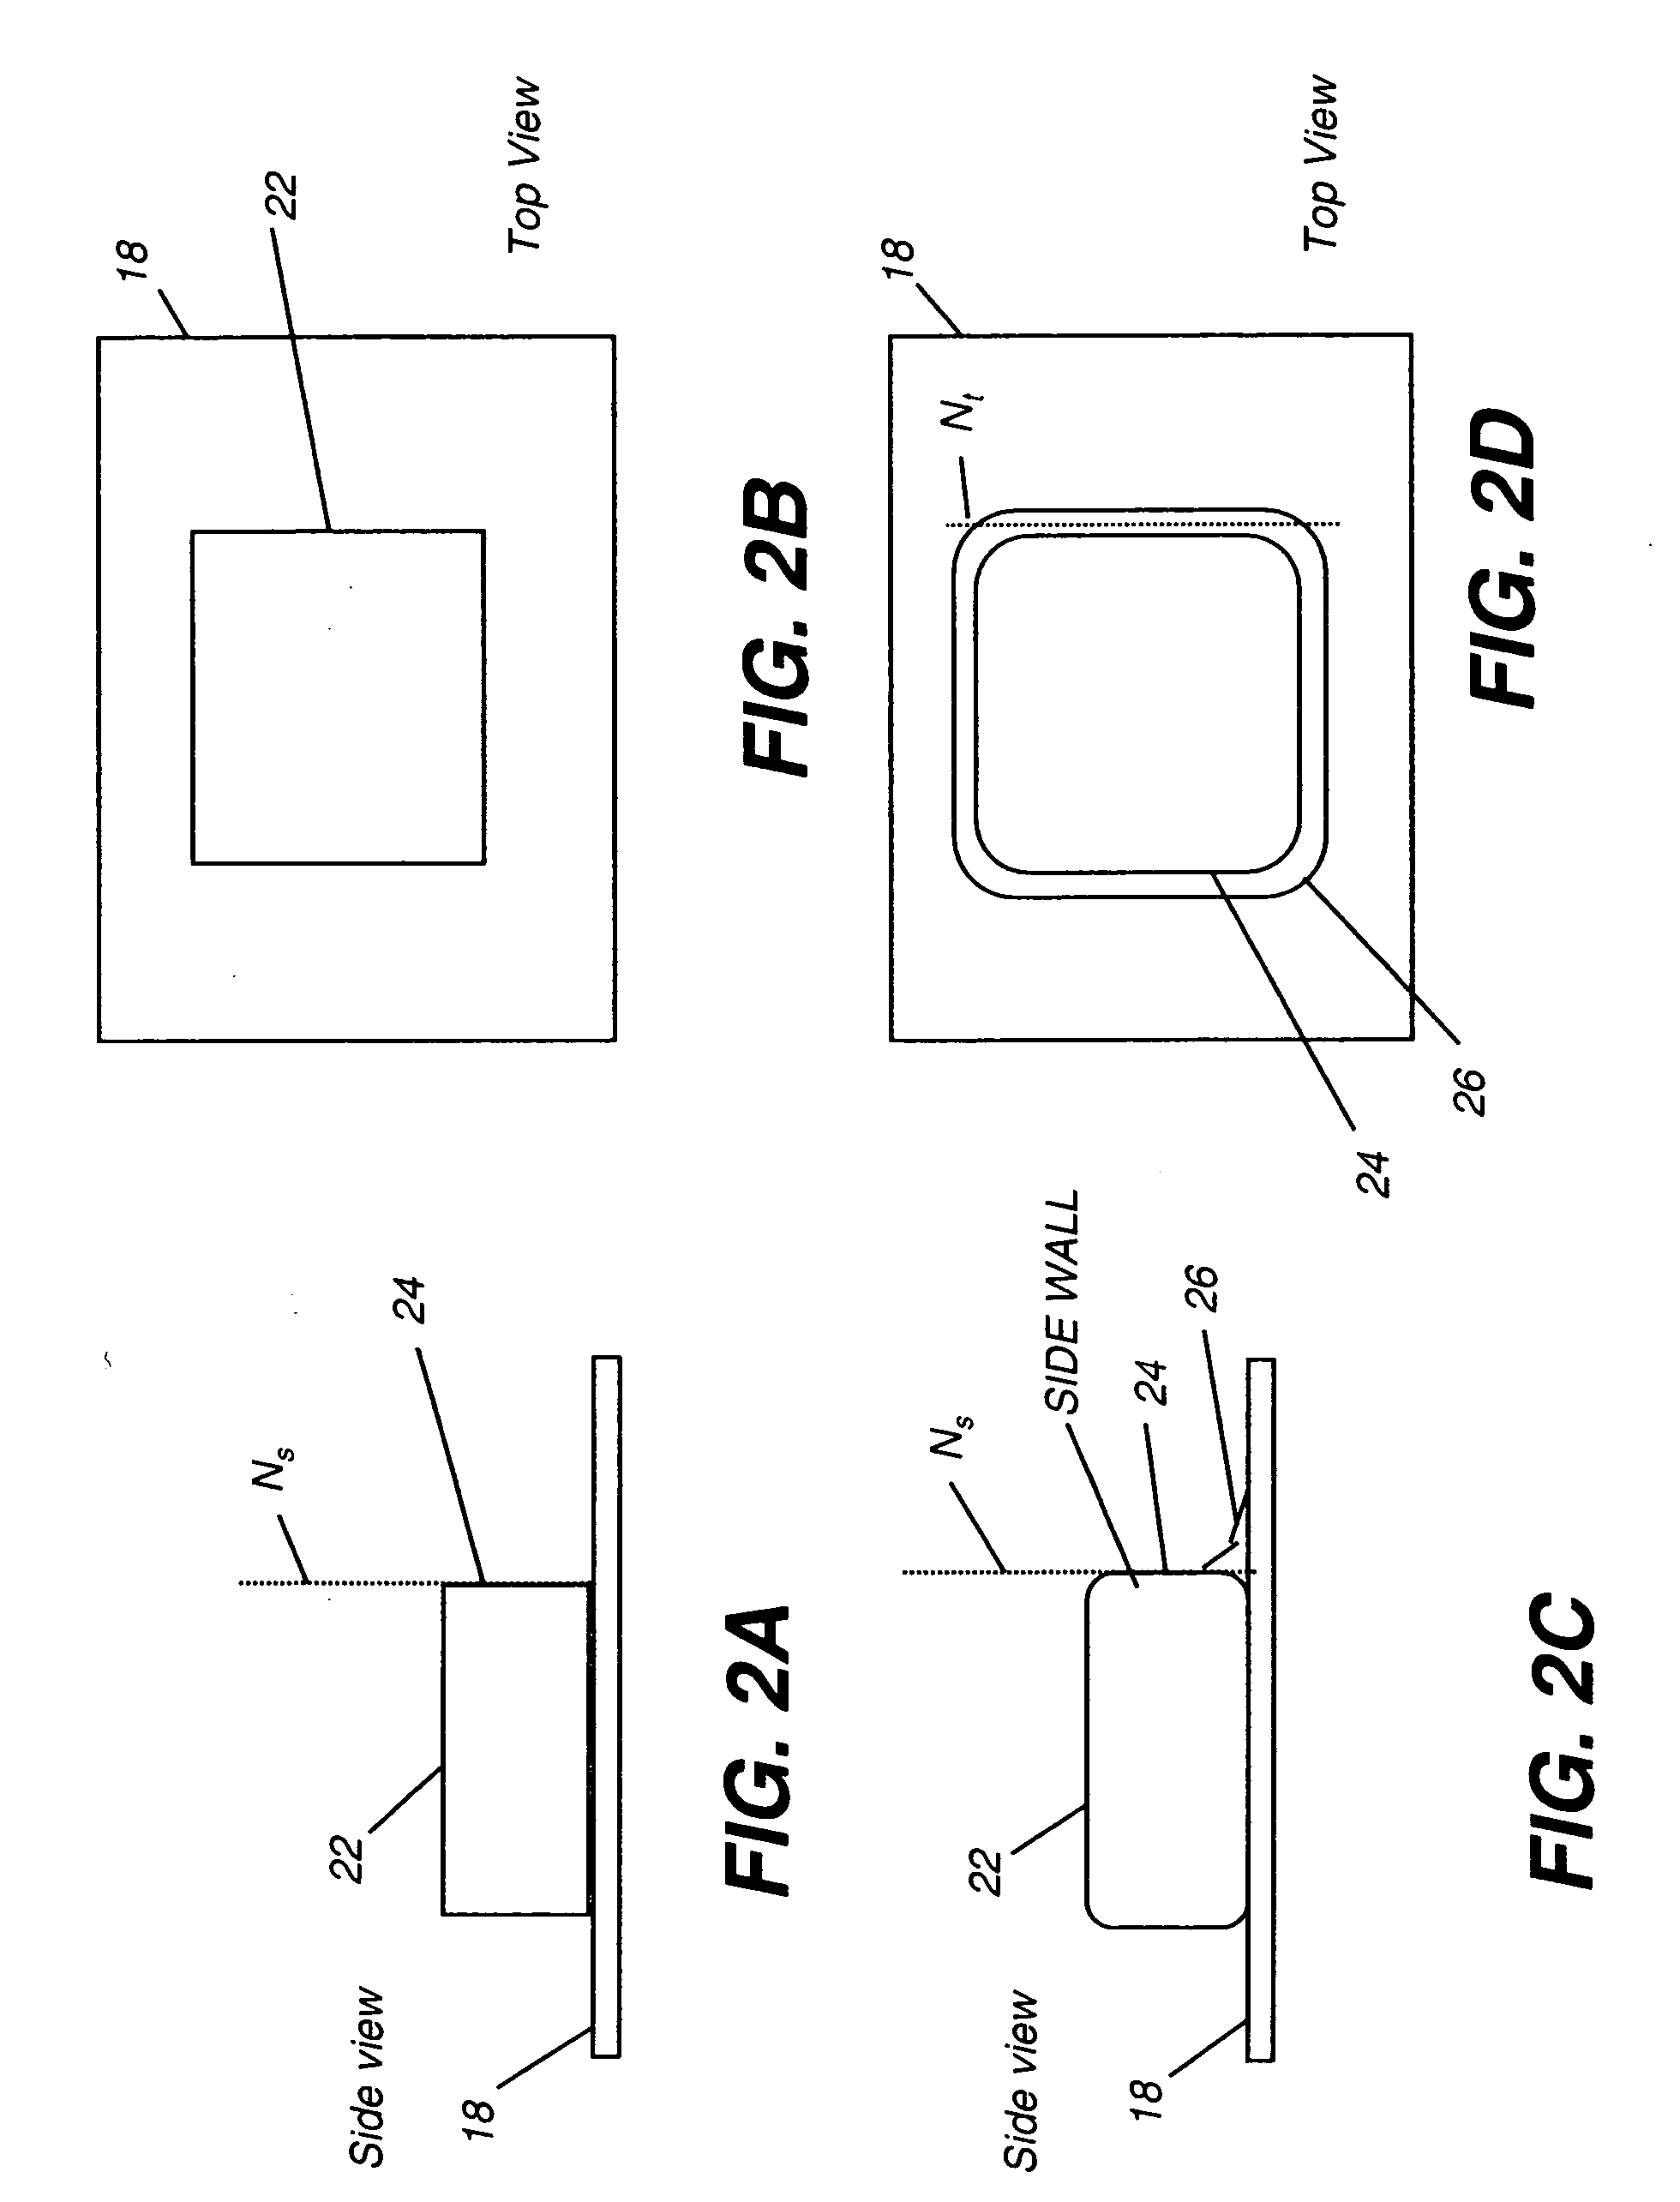 Two-dimensional aperture array for vapor deposition